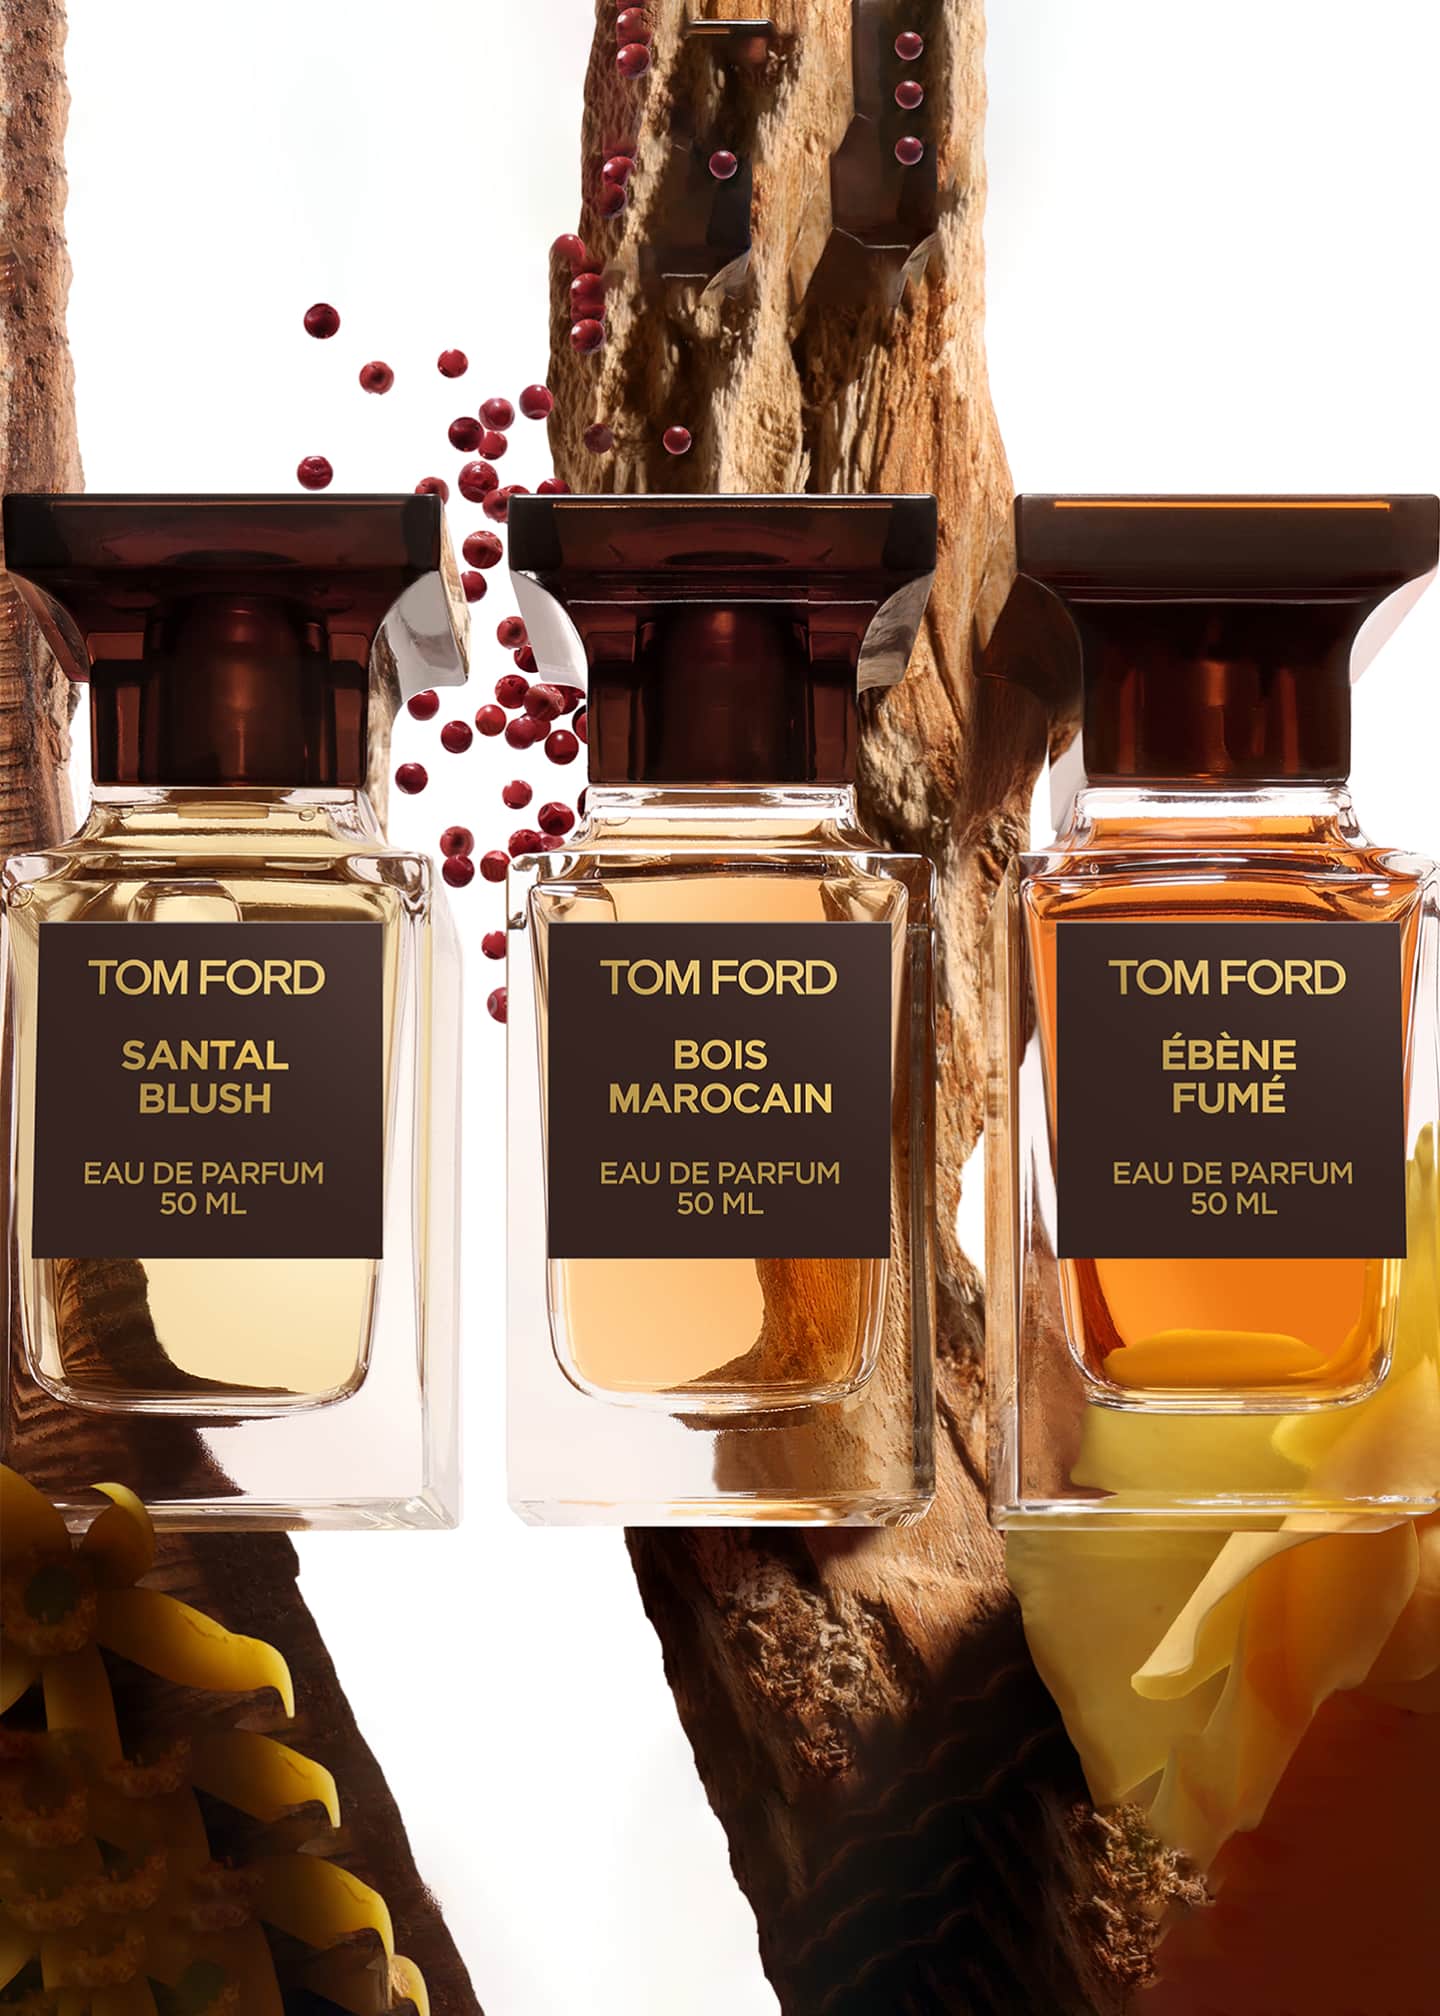 Tom Ford 1.7 oz. Bois Marocain Eau de Parfum